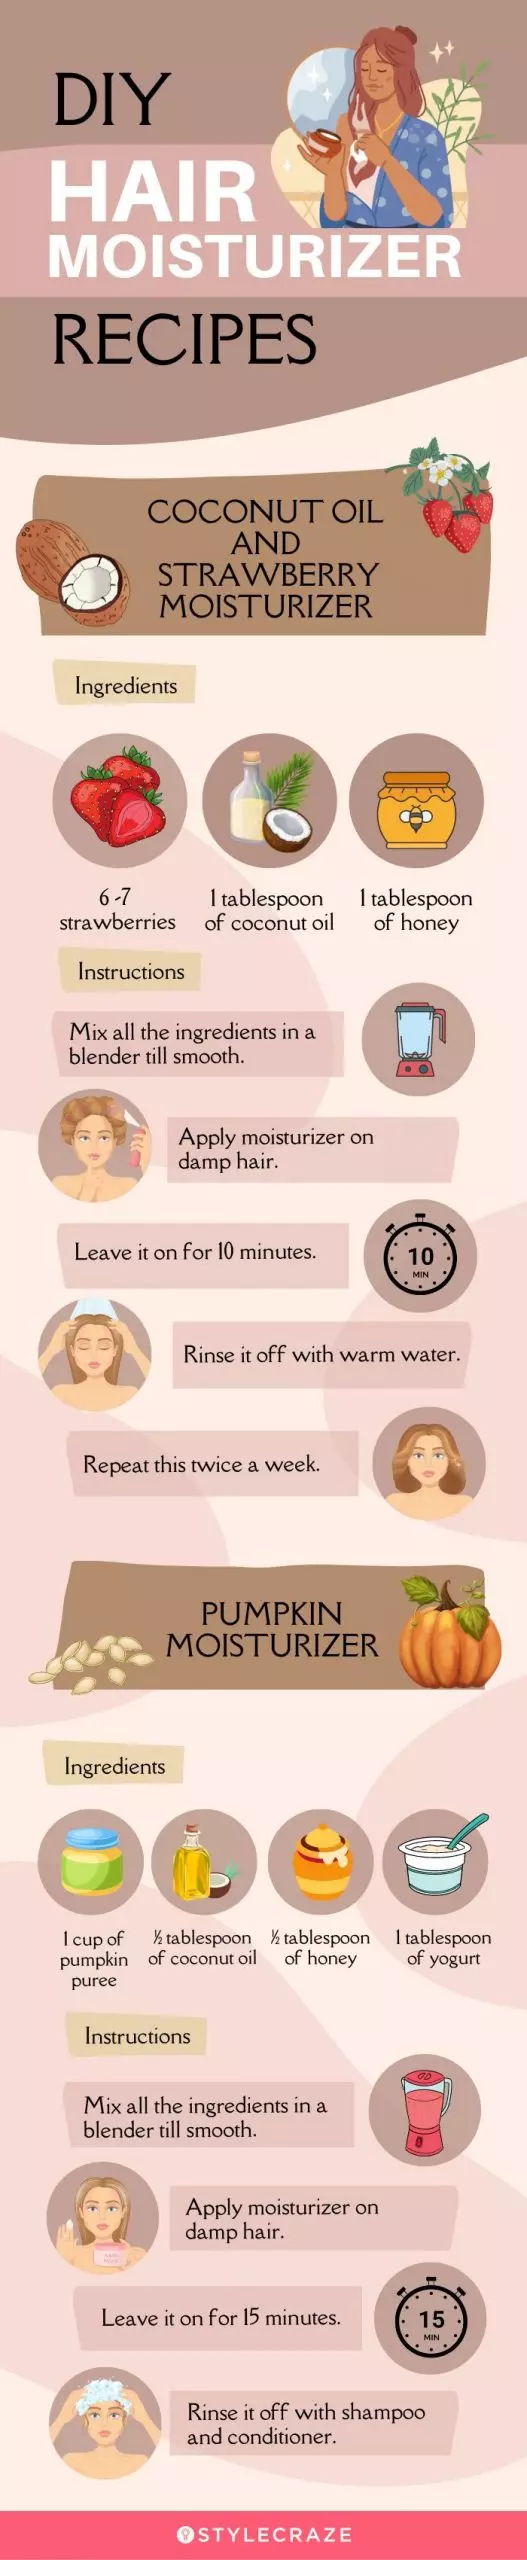 diy hair moisturizer recipes (infographic)